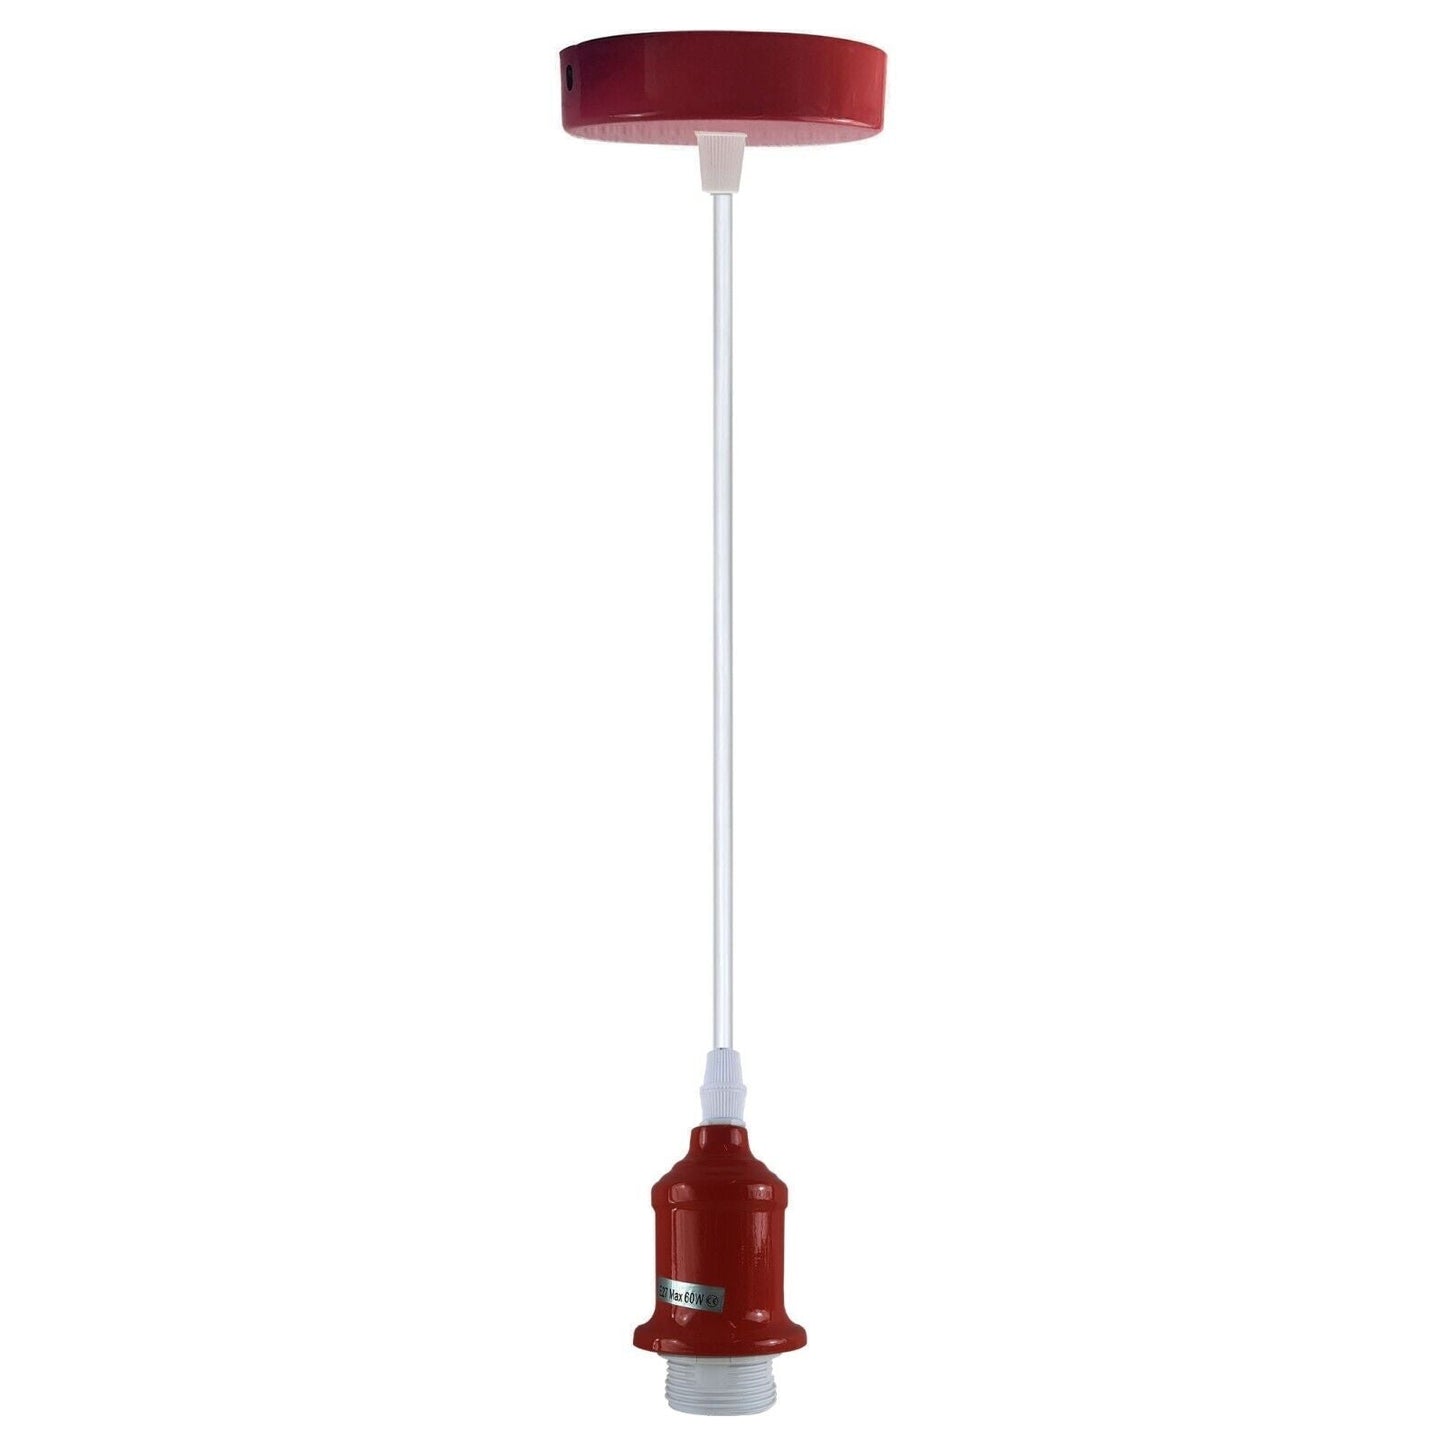 E27 Pendant Holder Ceiling Light Fitting Vintage Industrial Red